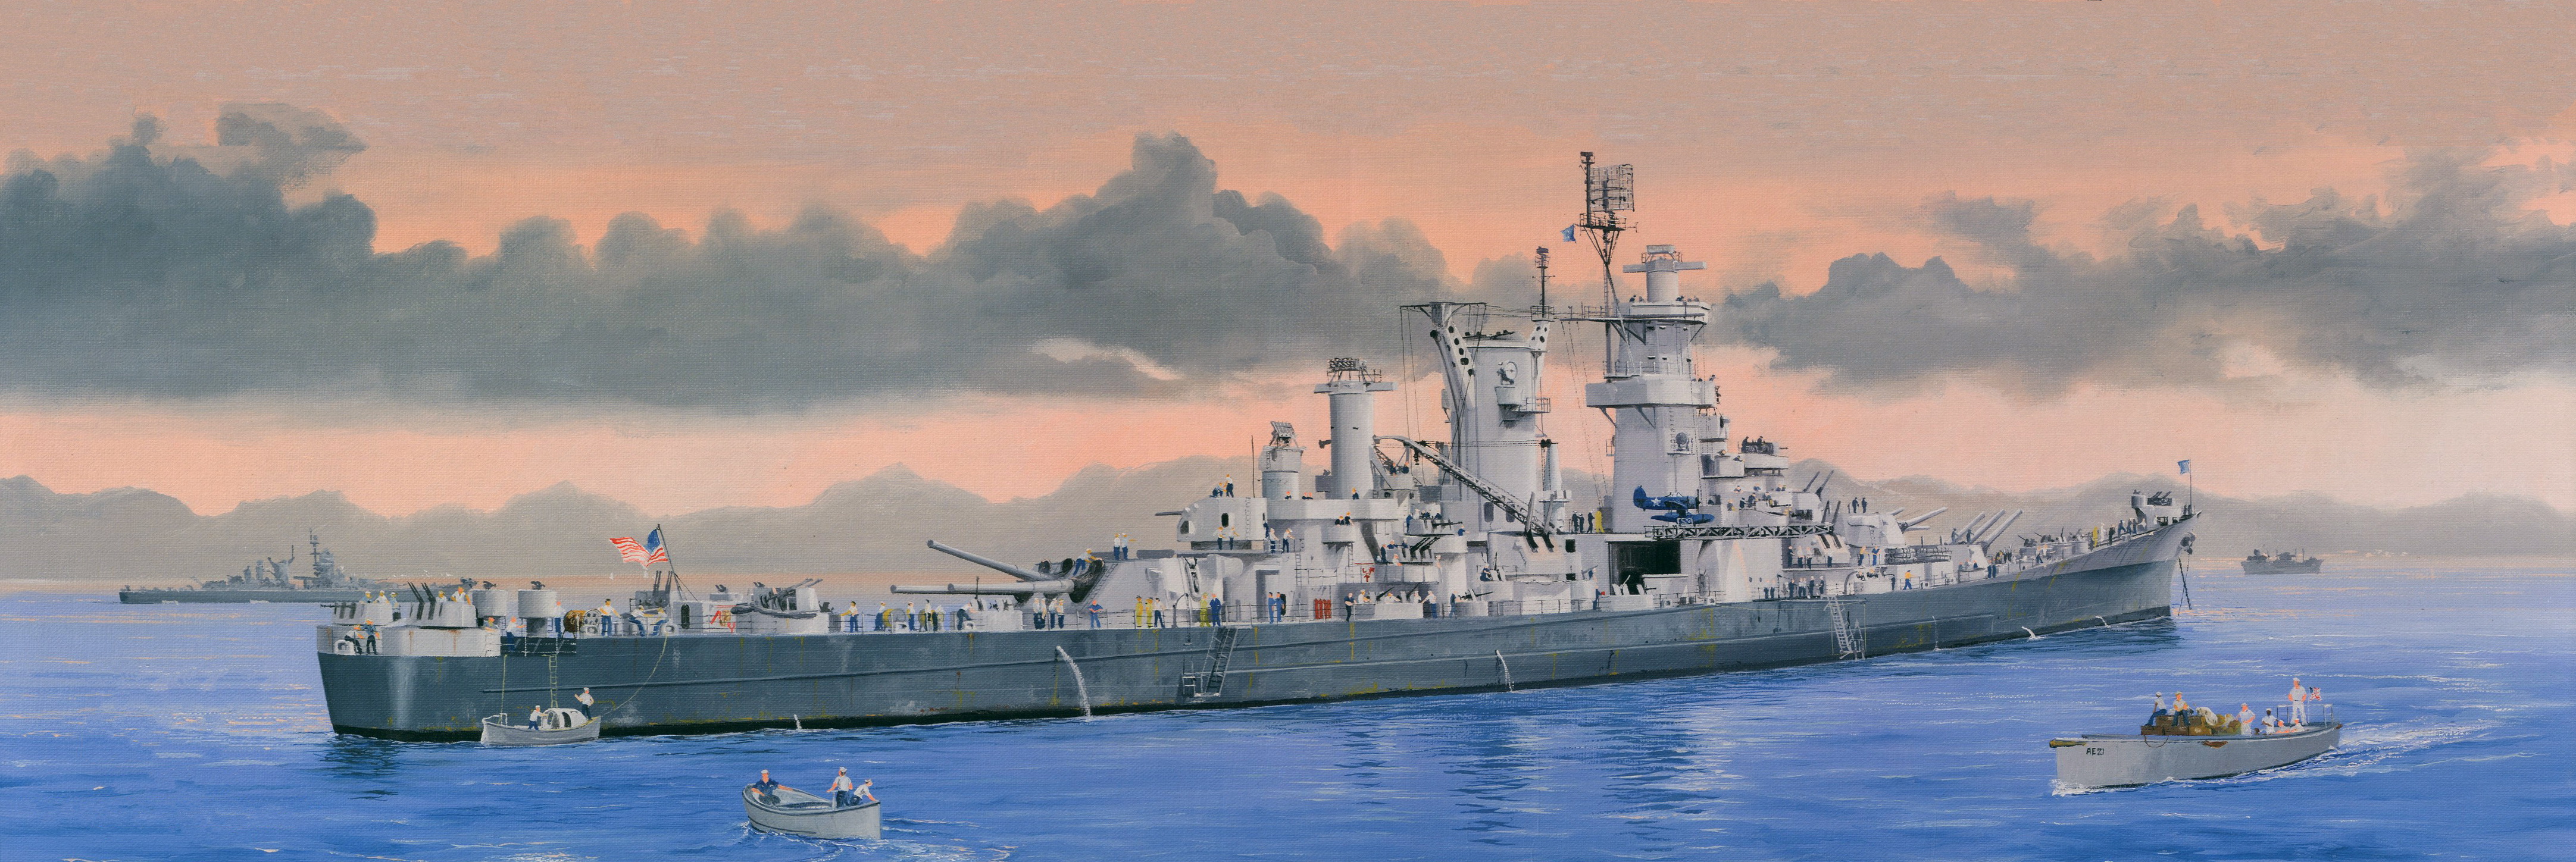 рисунок USS Guam (CB-2)